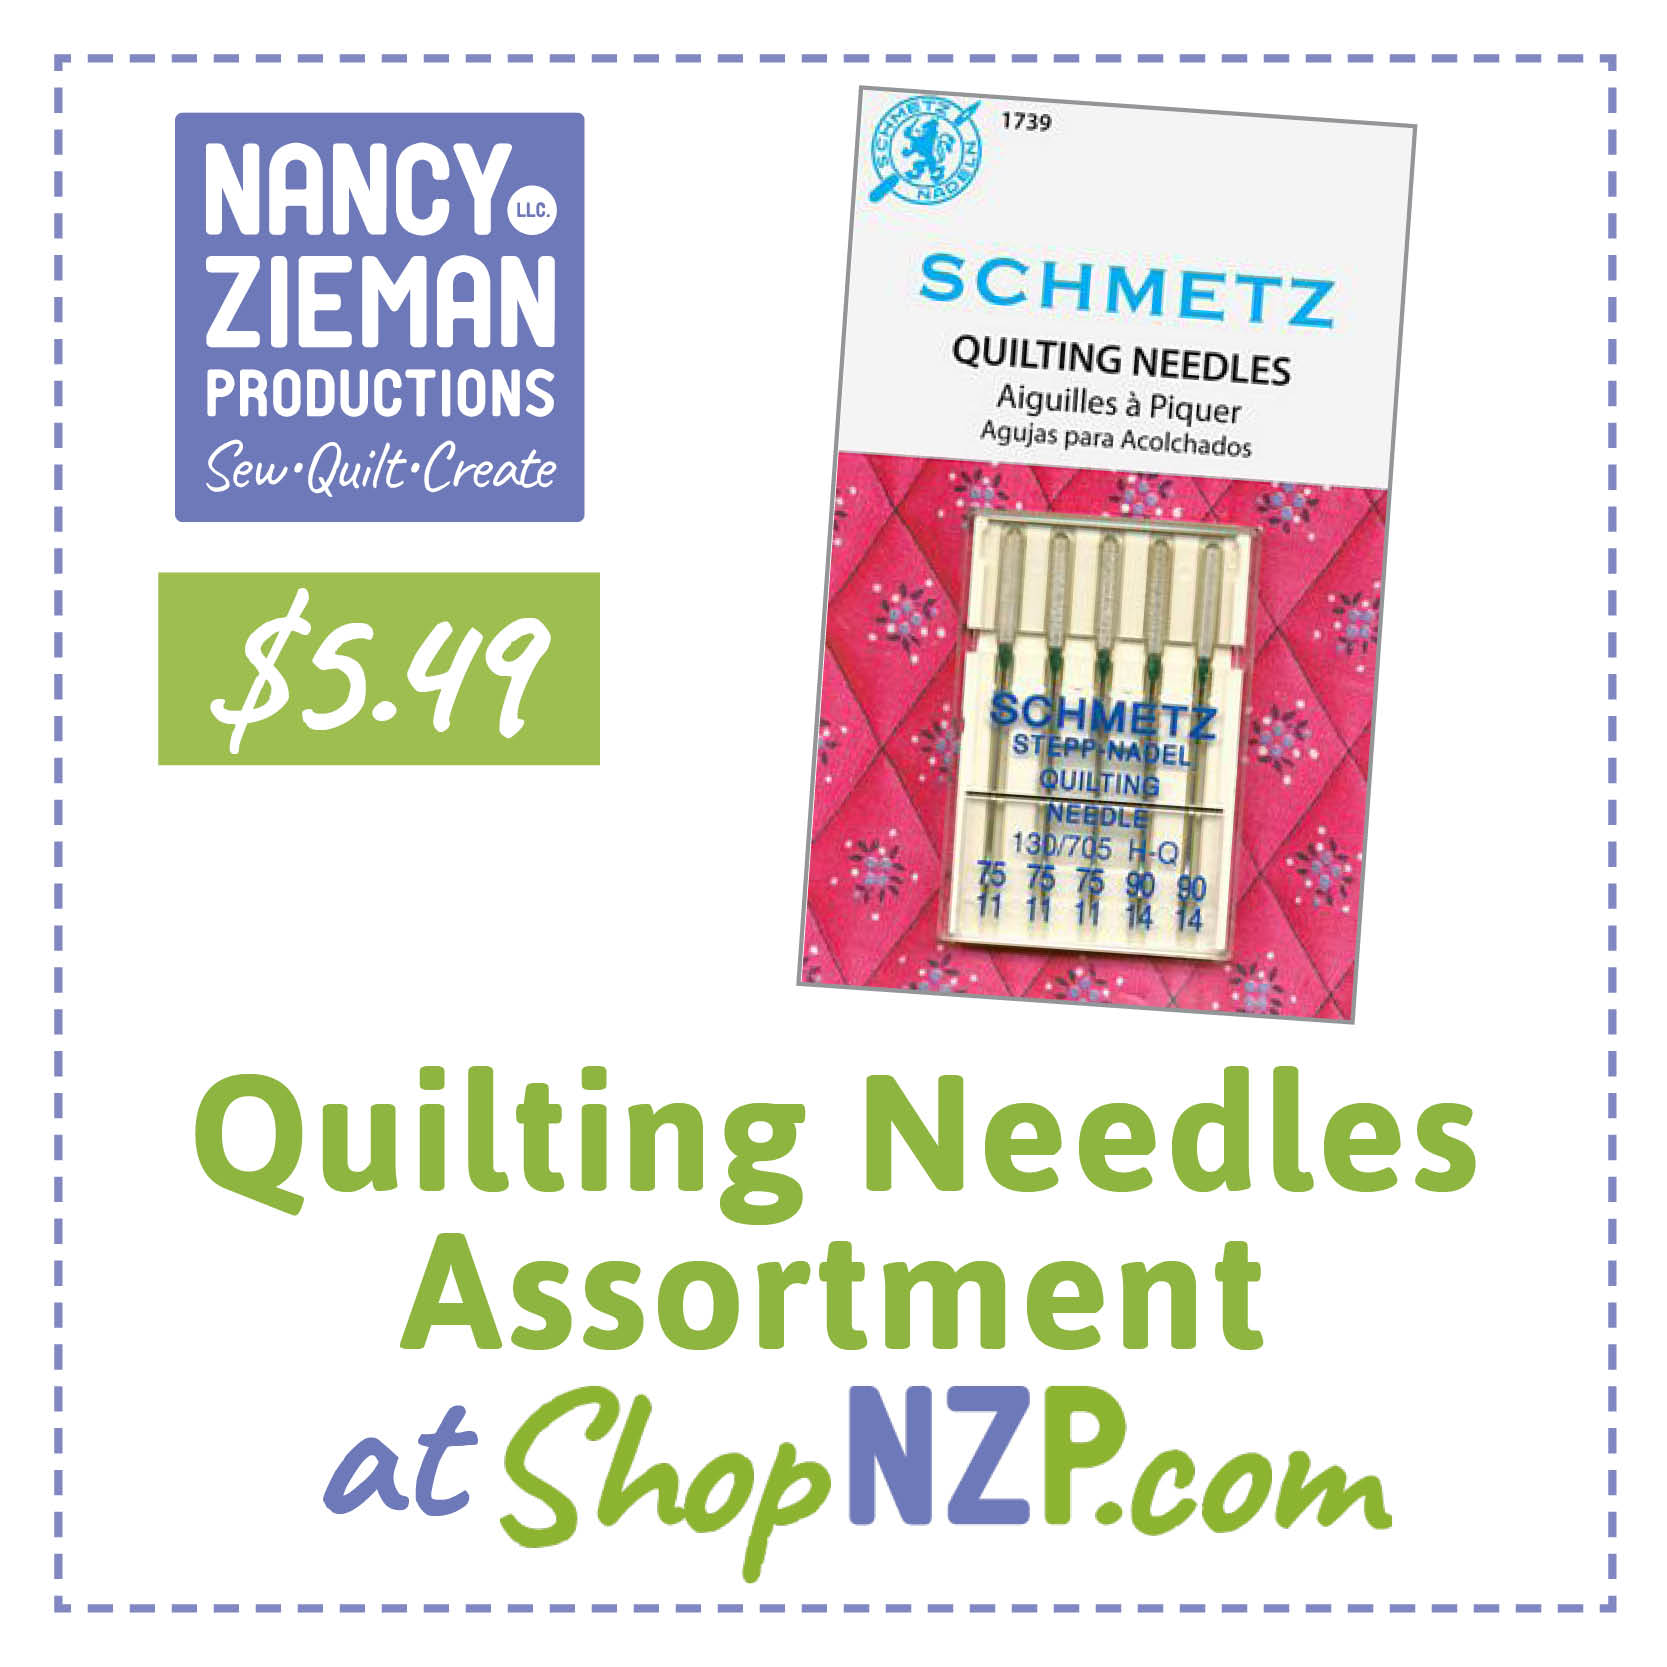 Schmetz Quilting Needles Assortment available at ShopNZP.com